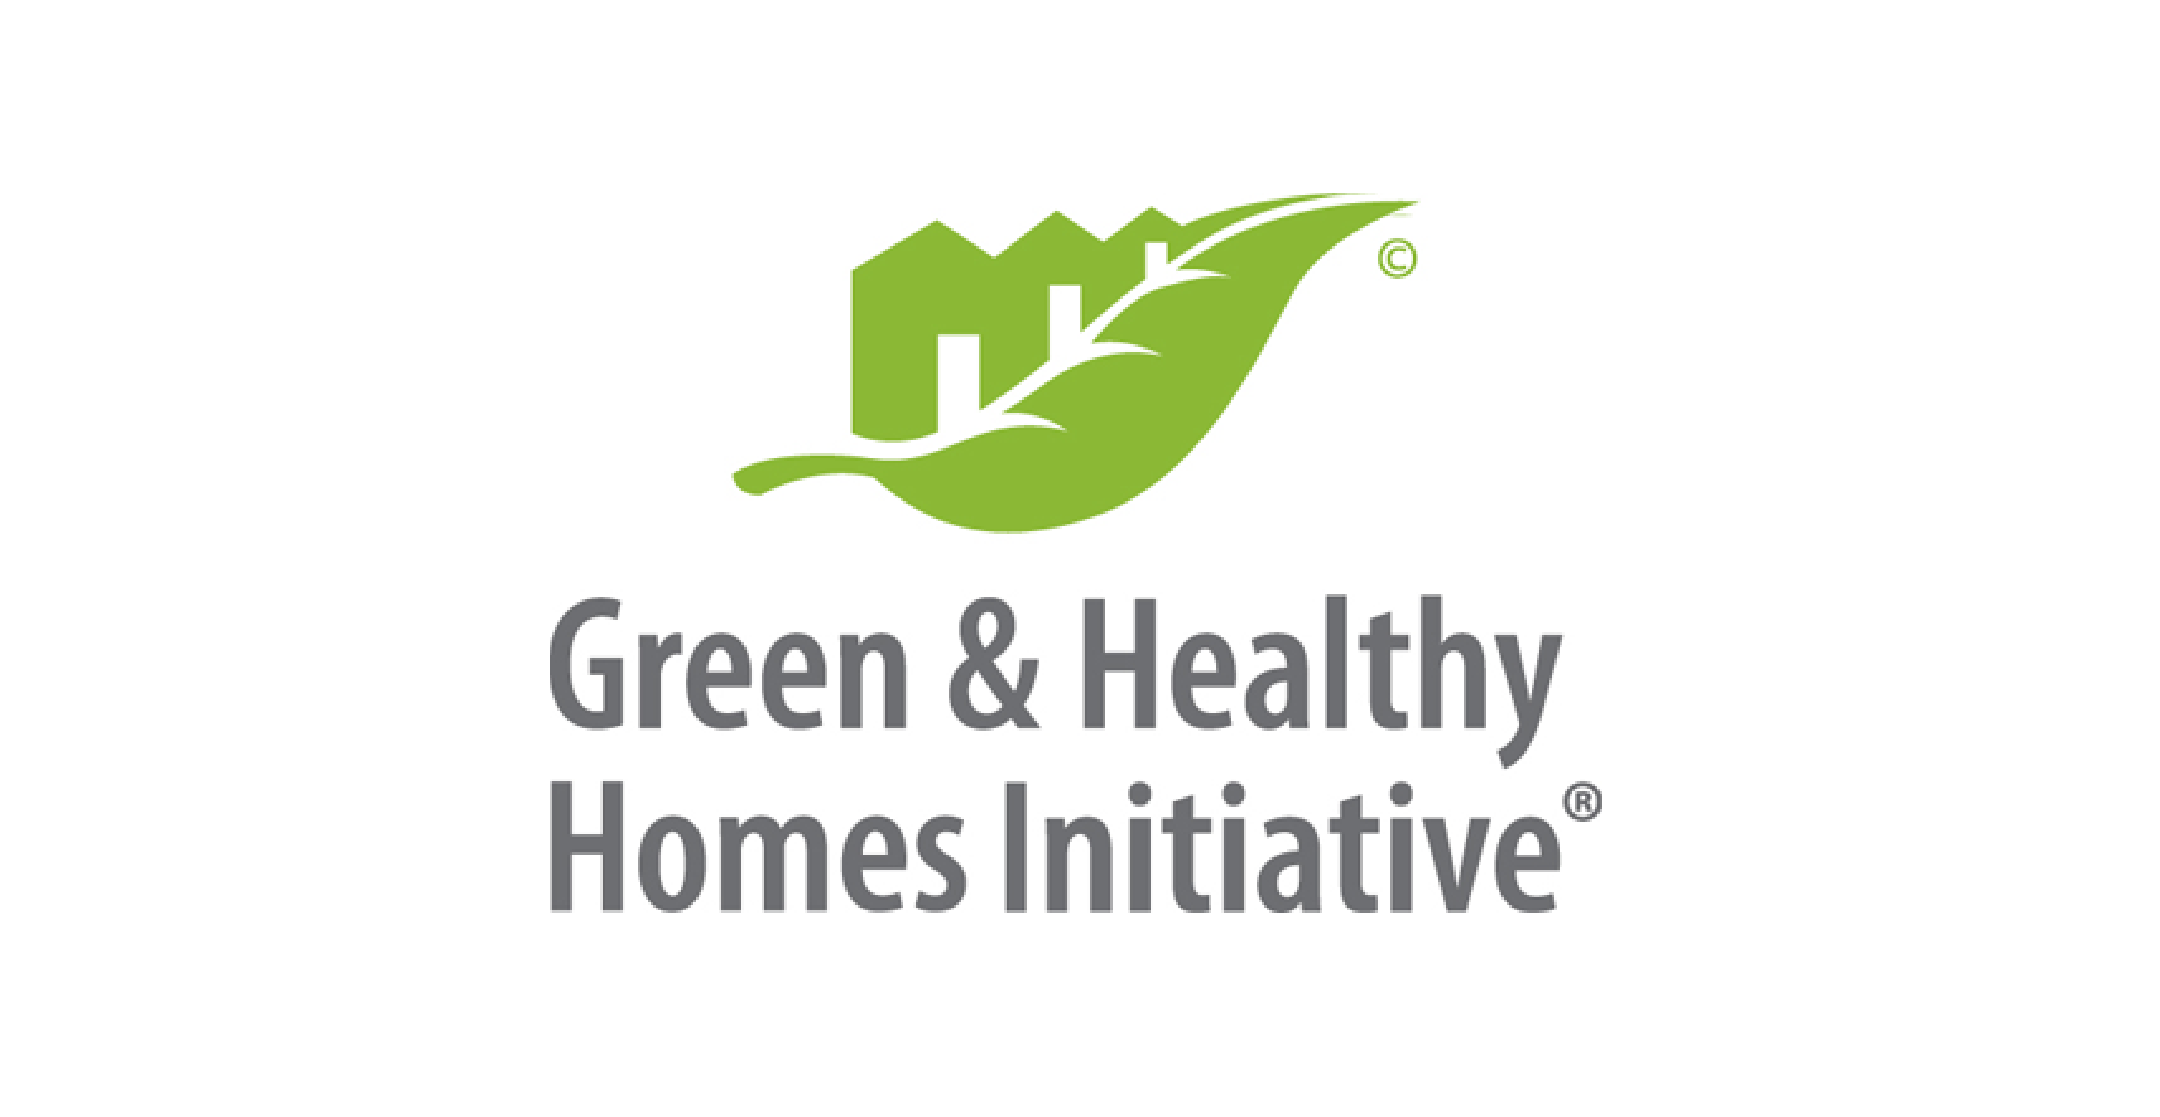 Green & Healthy Homes Initiative